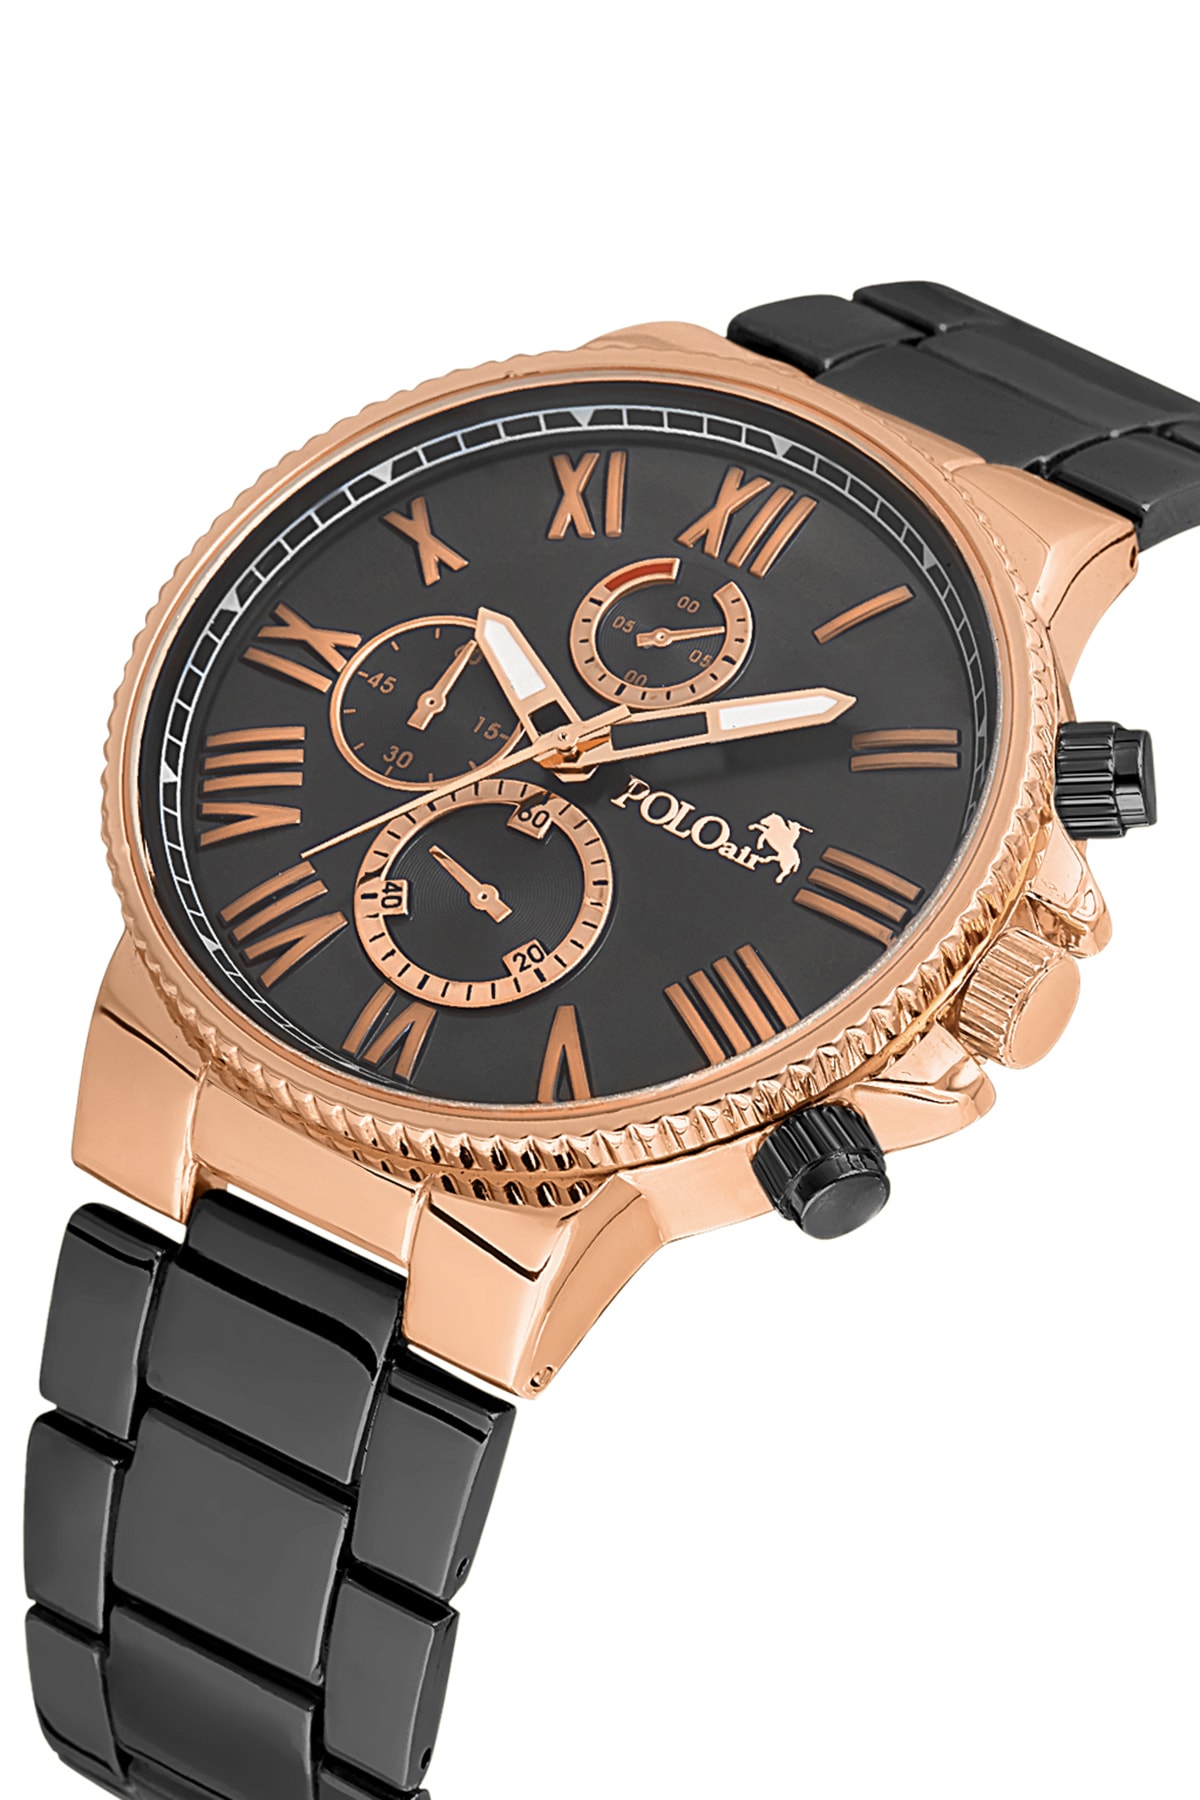 Polo Air Roman Numeral Men's Wristwatch Black Copper Case